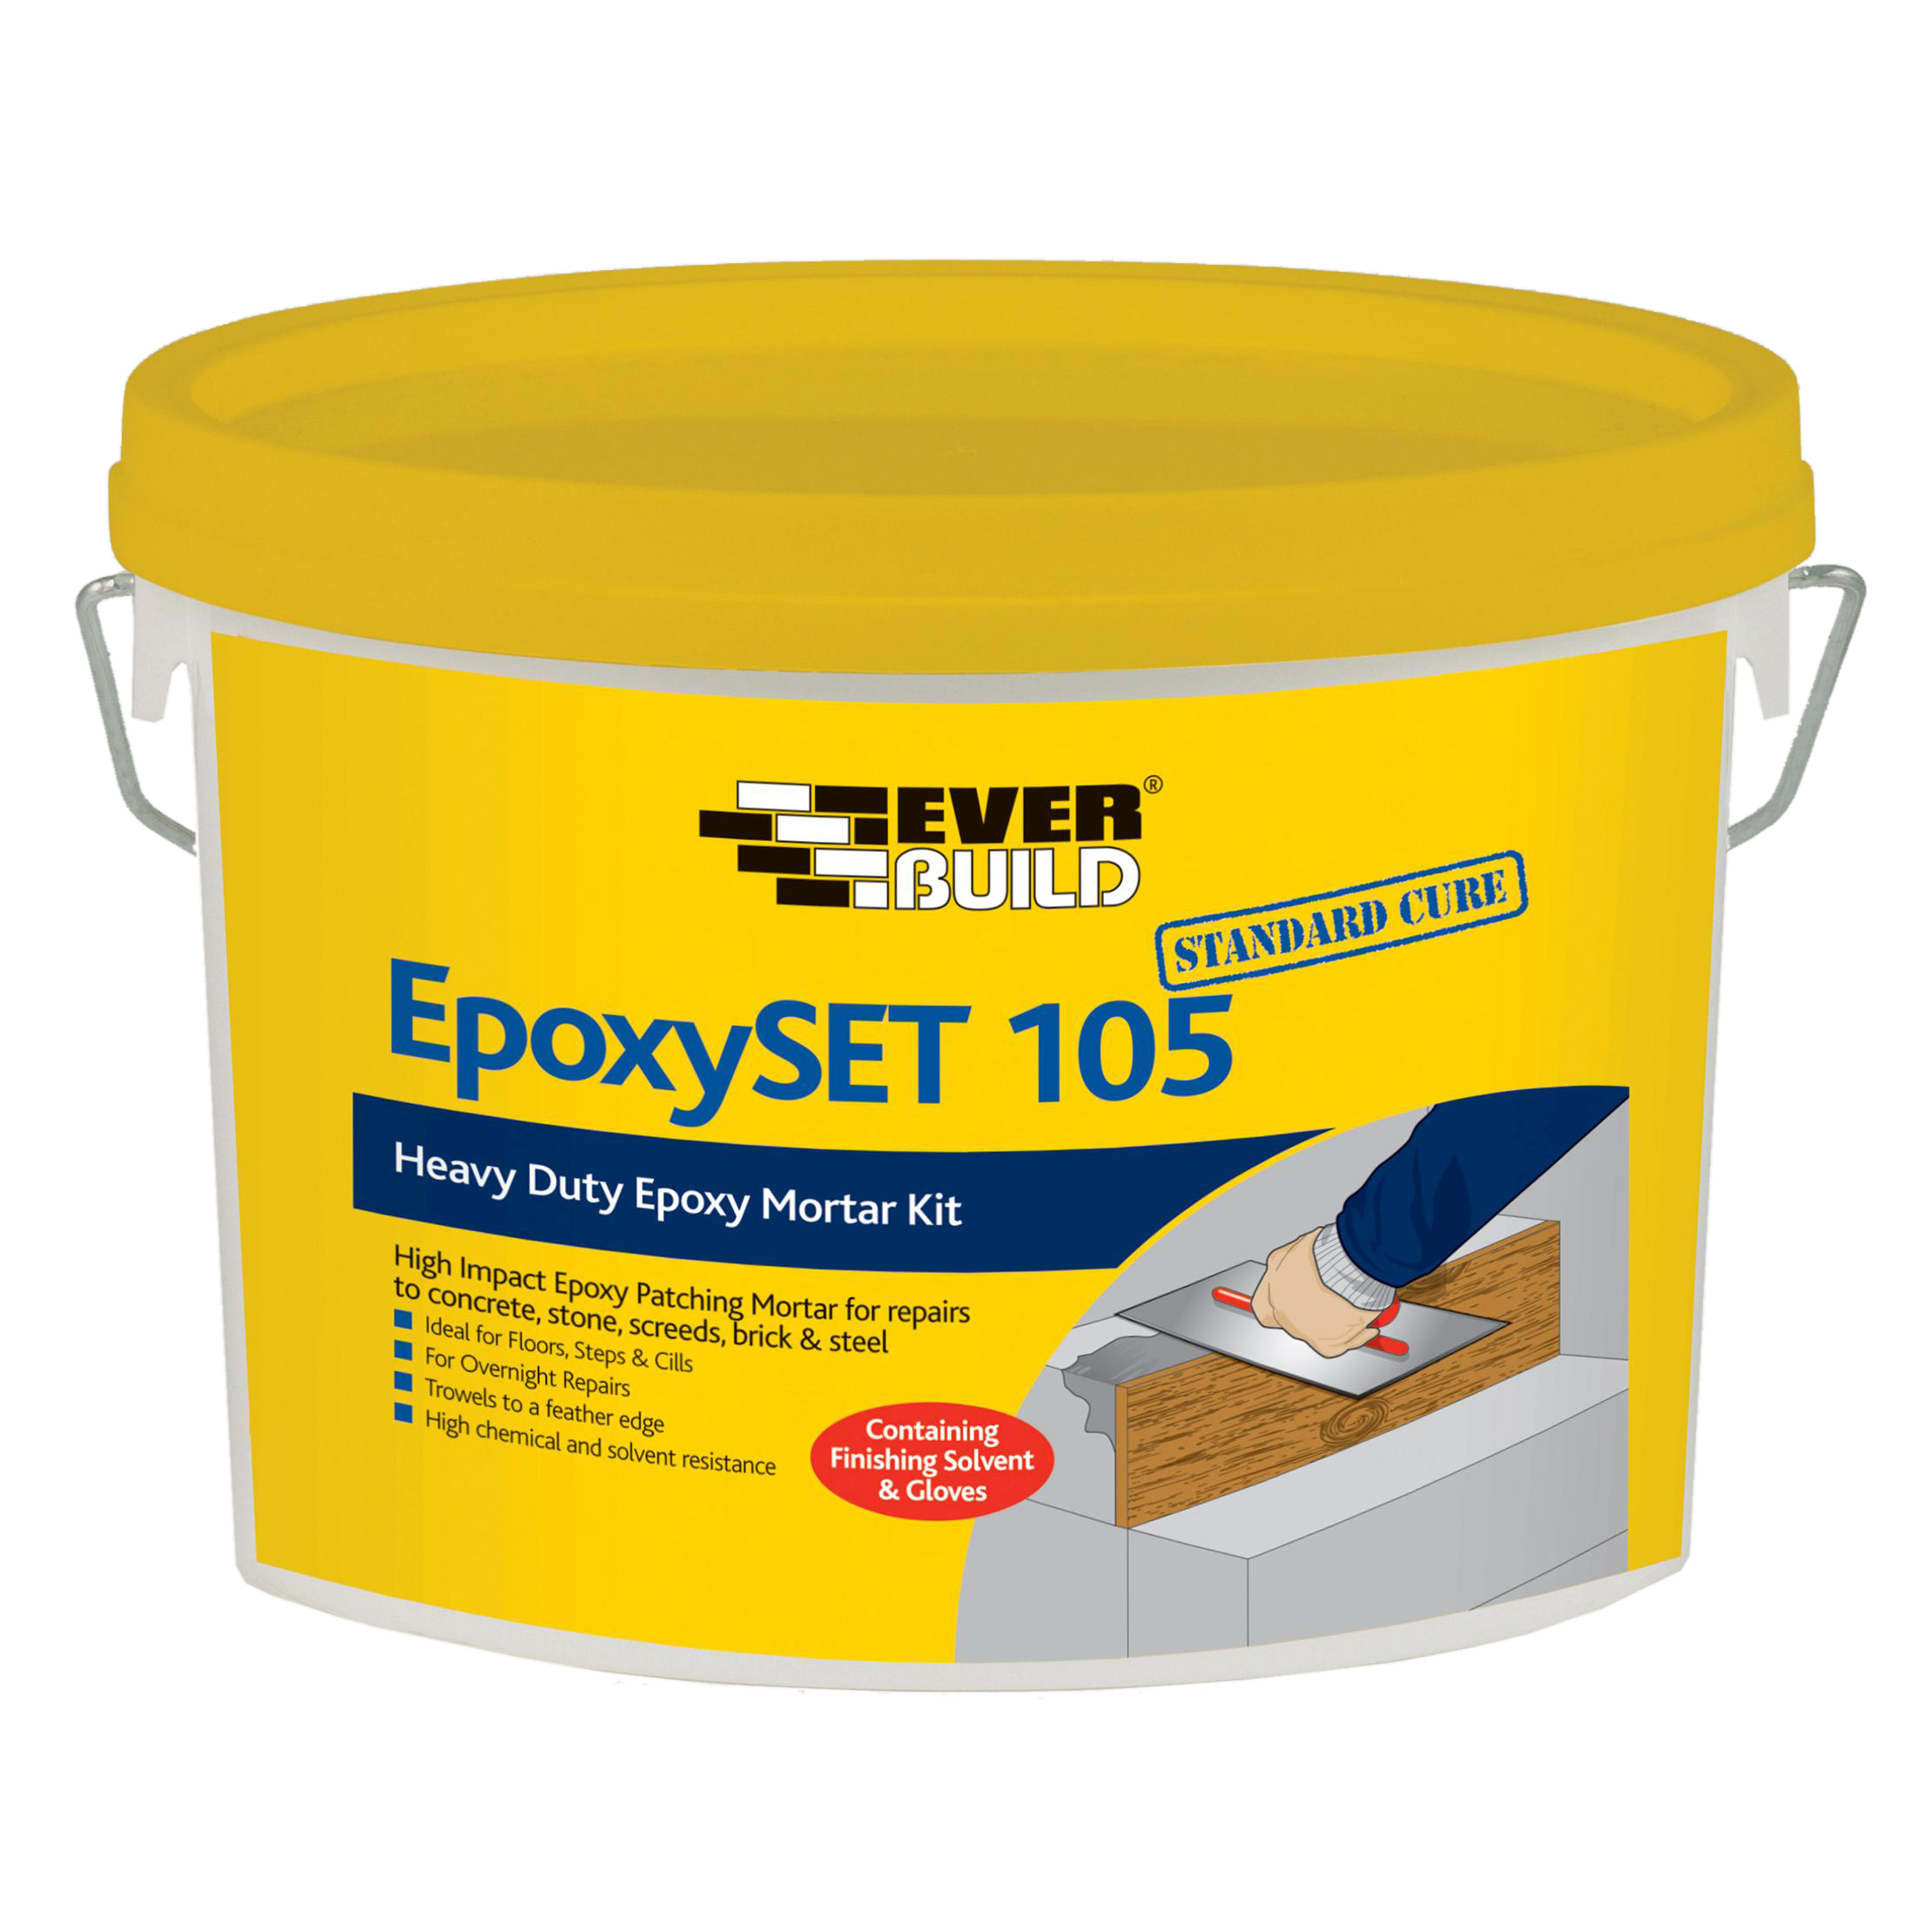 4kg 105 Epoxyset Standard Cure Repair Mortar Kit